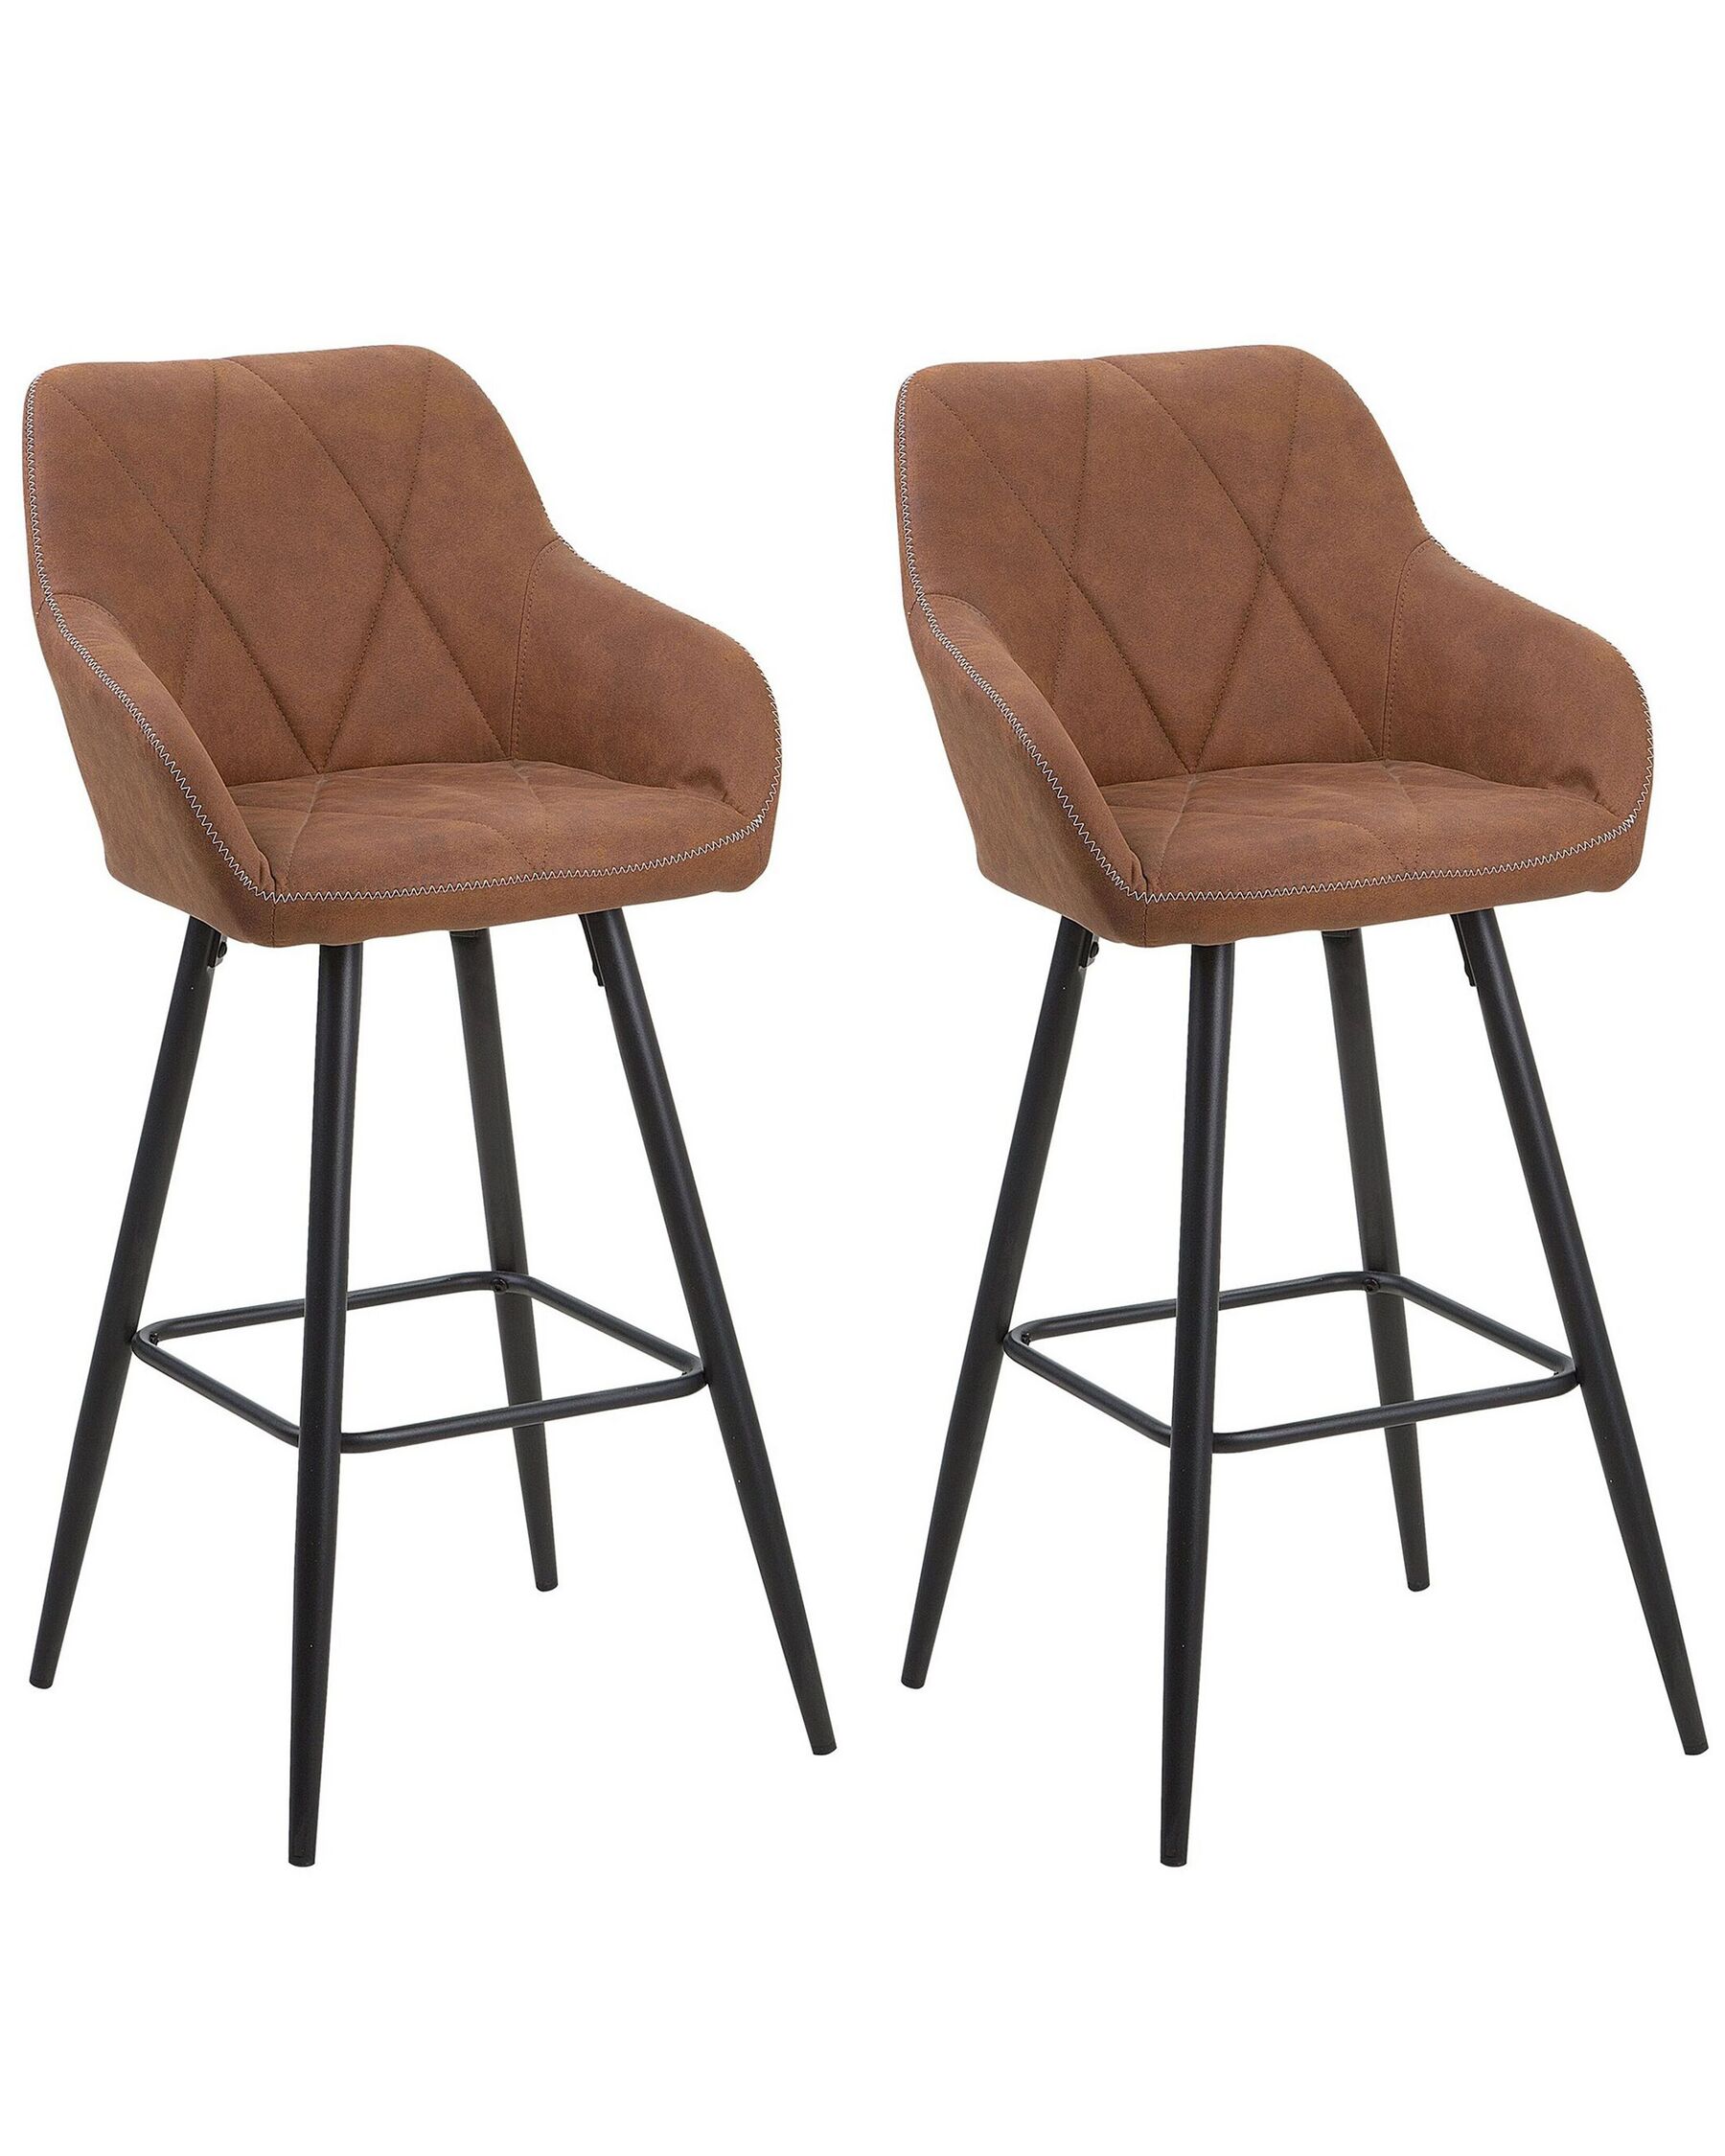 Set of 2 Fabric Bar Chairs Brown DARIEN_724405